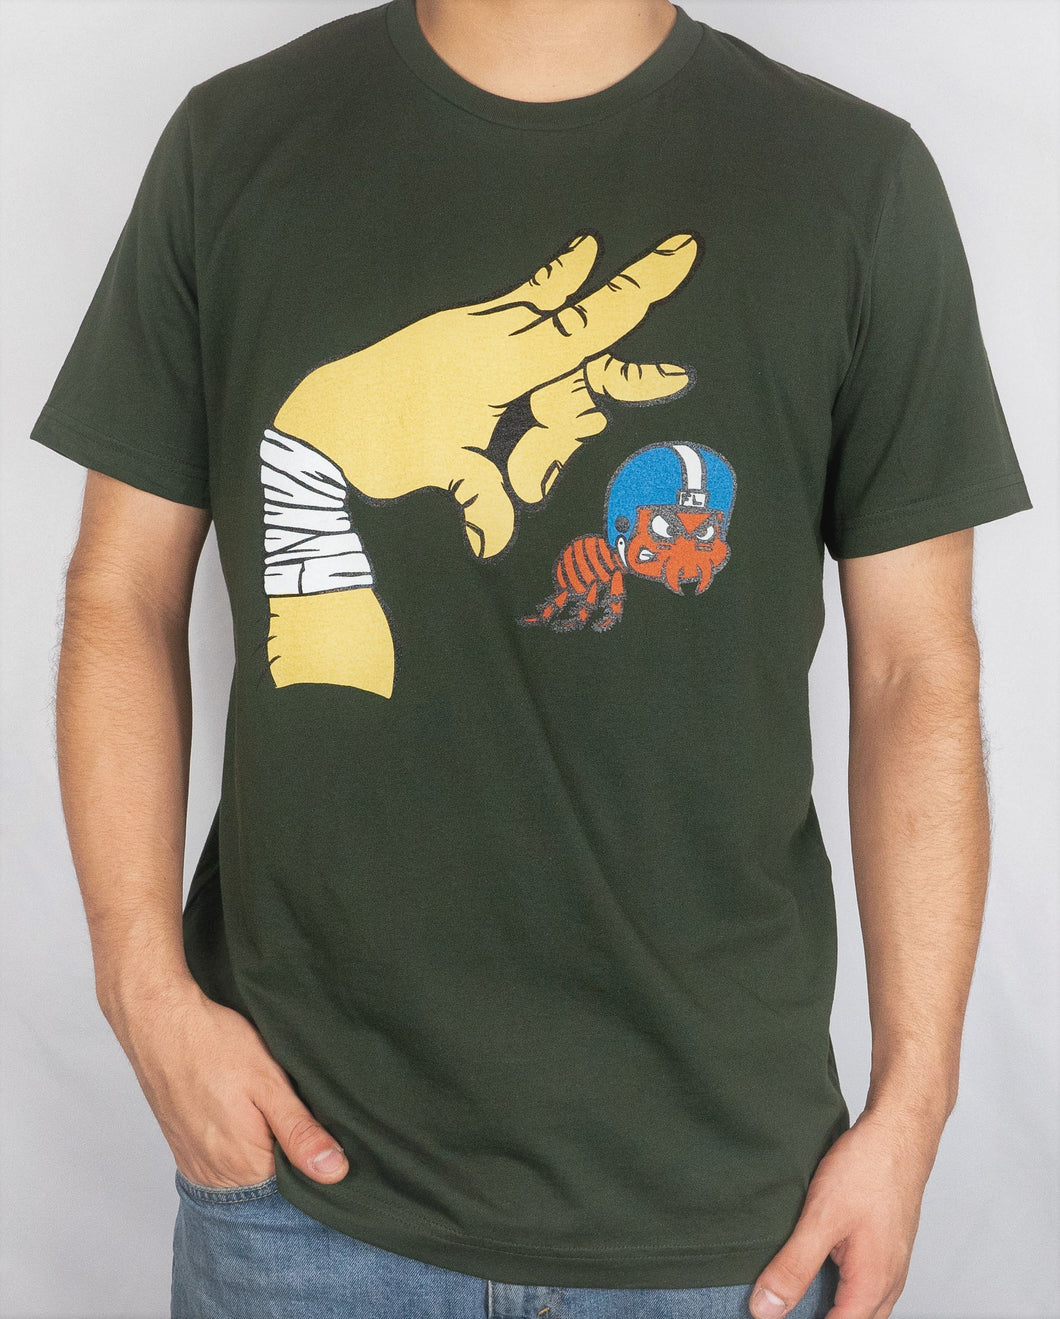 Flea Flicker Football Graphic Tee T Shirt